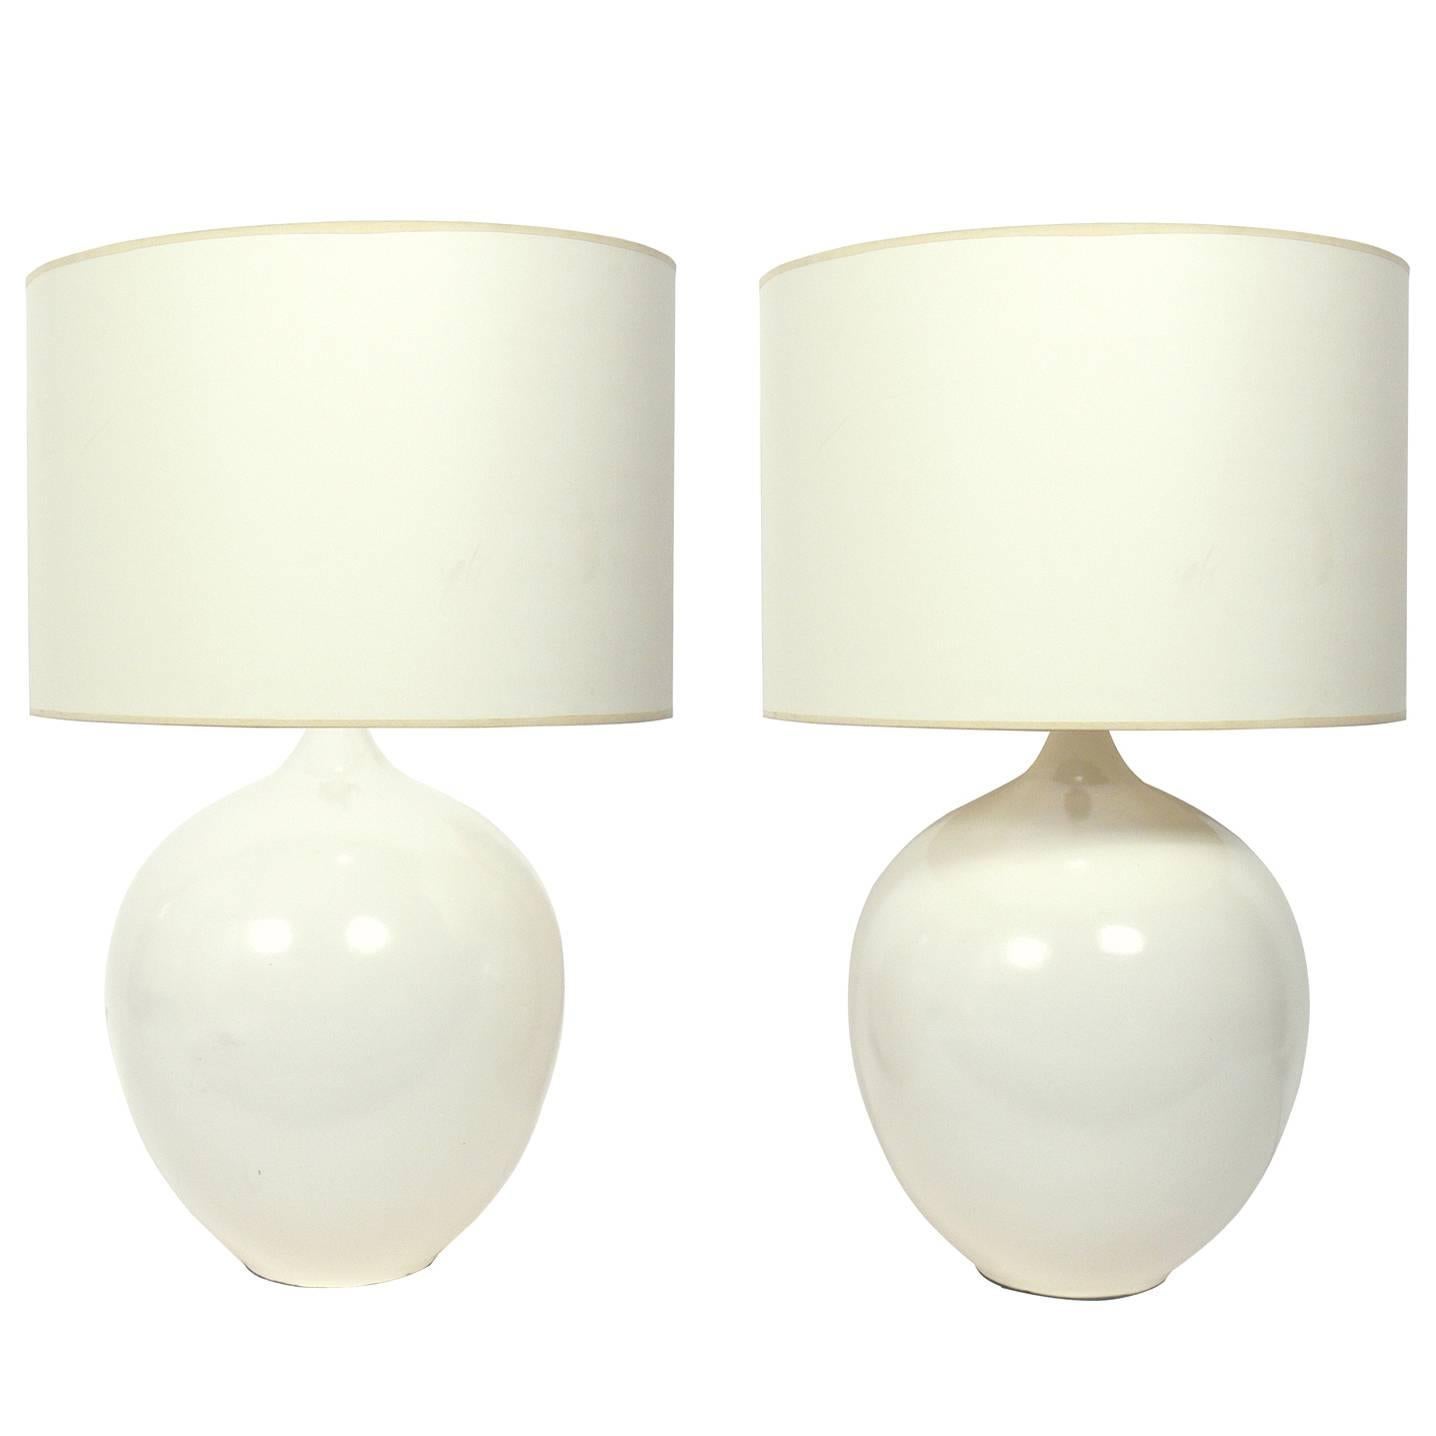 Pair of Sculptural White Ceramic Lamps